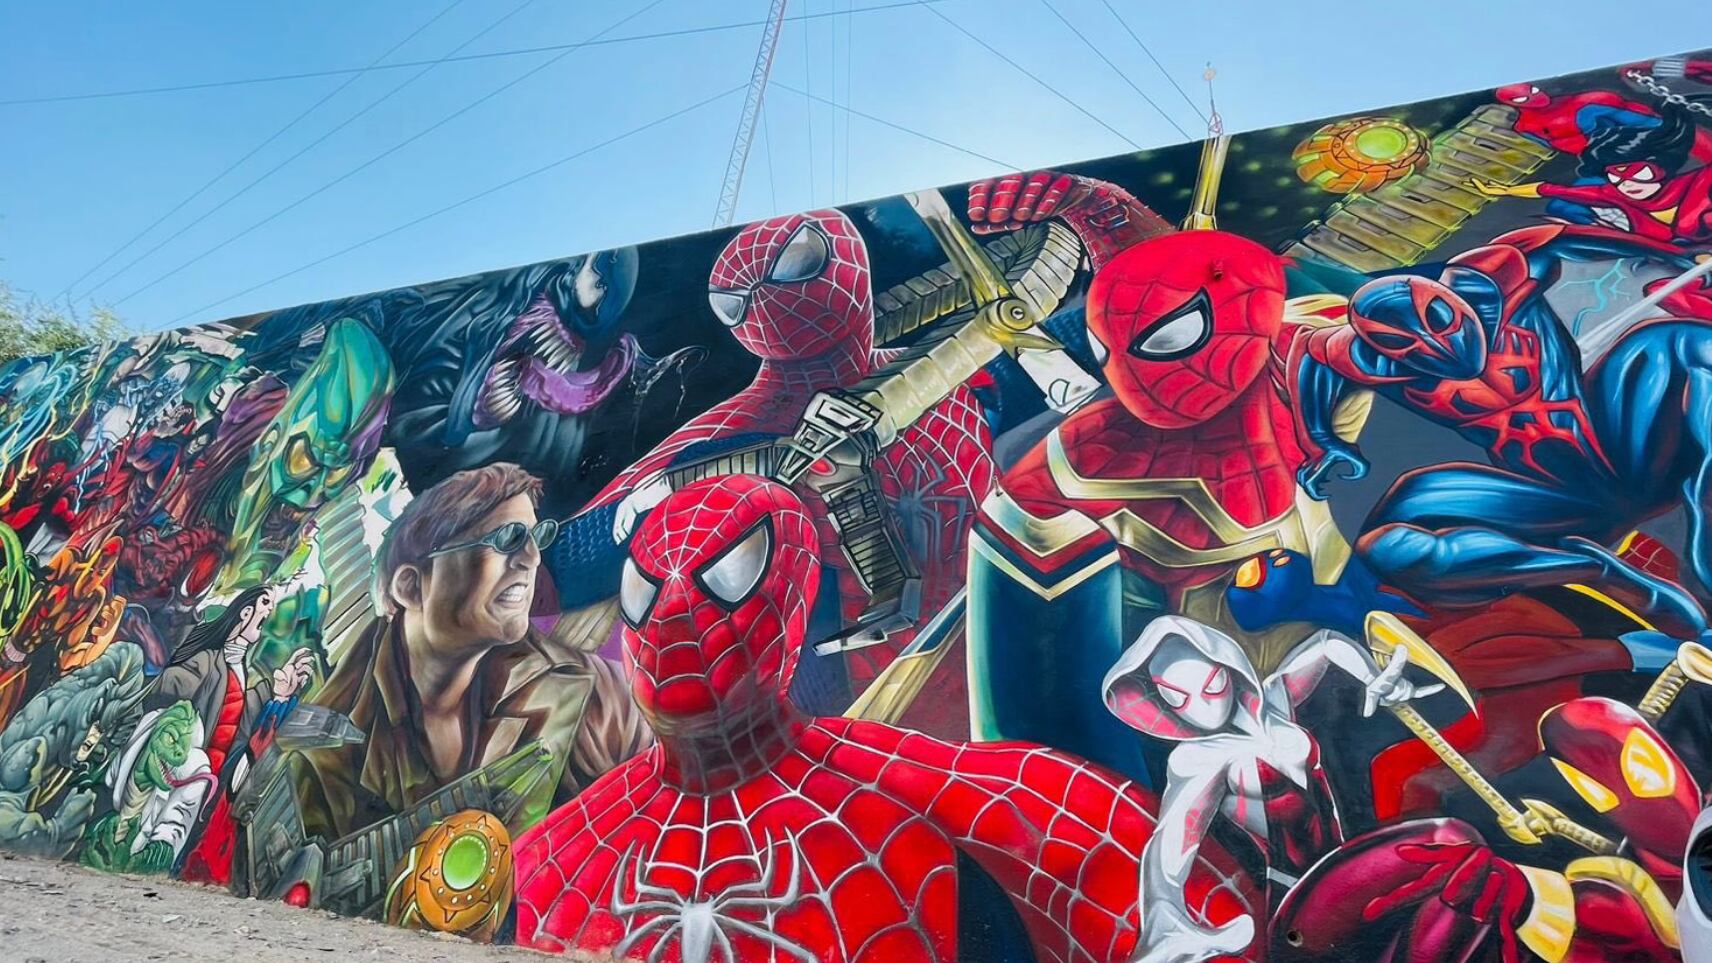 El mural del spiderverse.